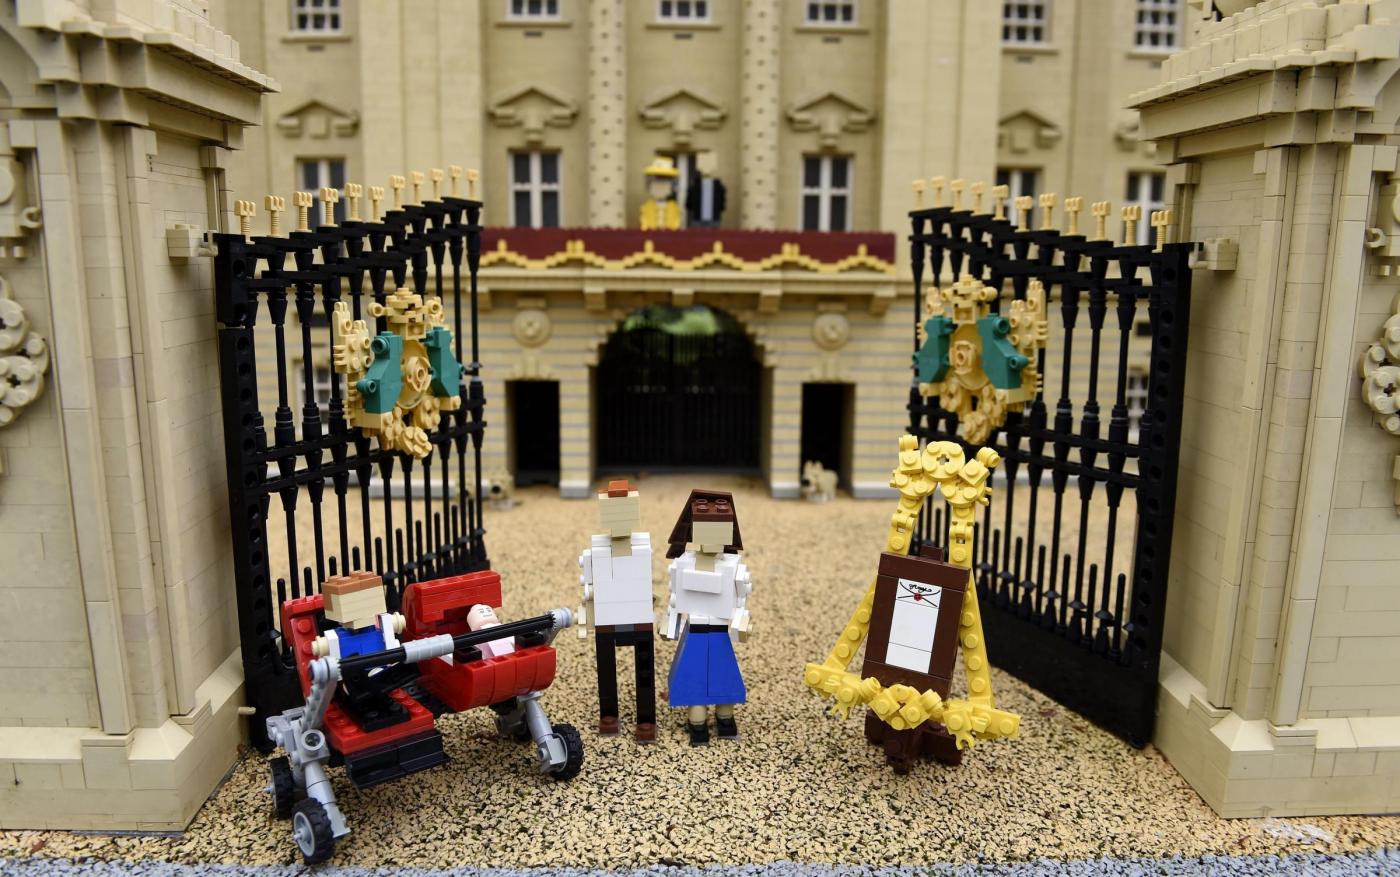 Royal baby aggiunta alla "Miniland Royal Family" fatta con i Lego FOTO